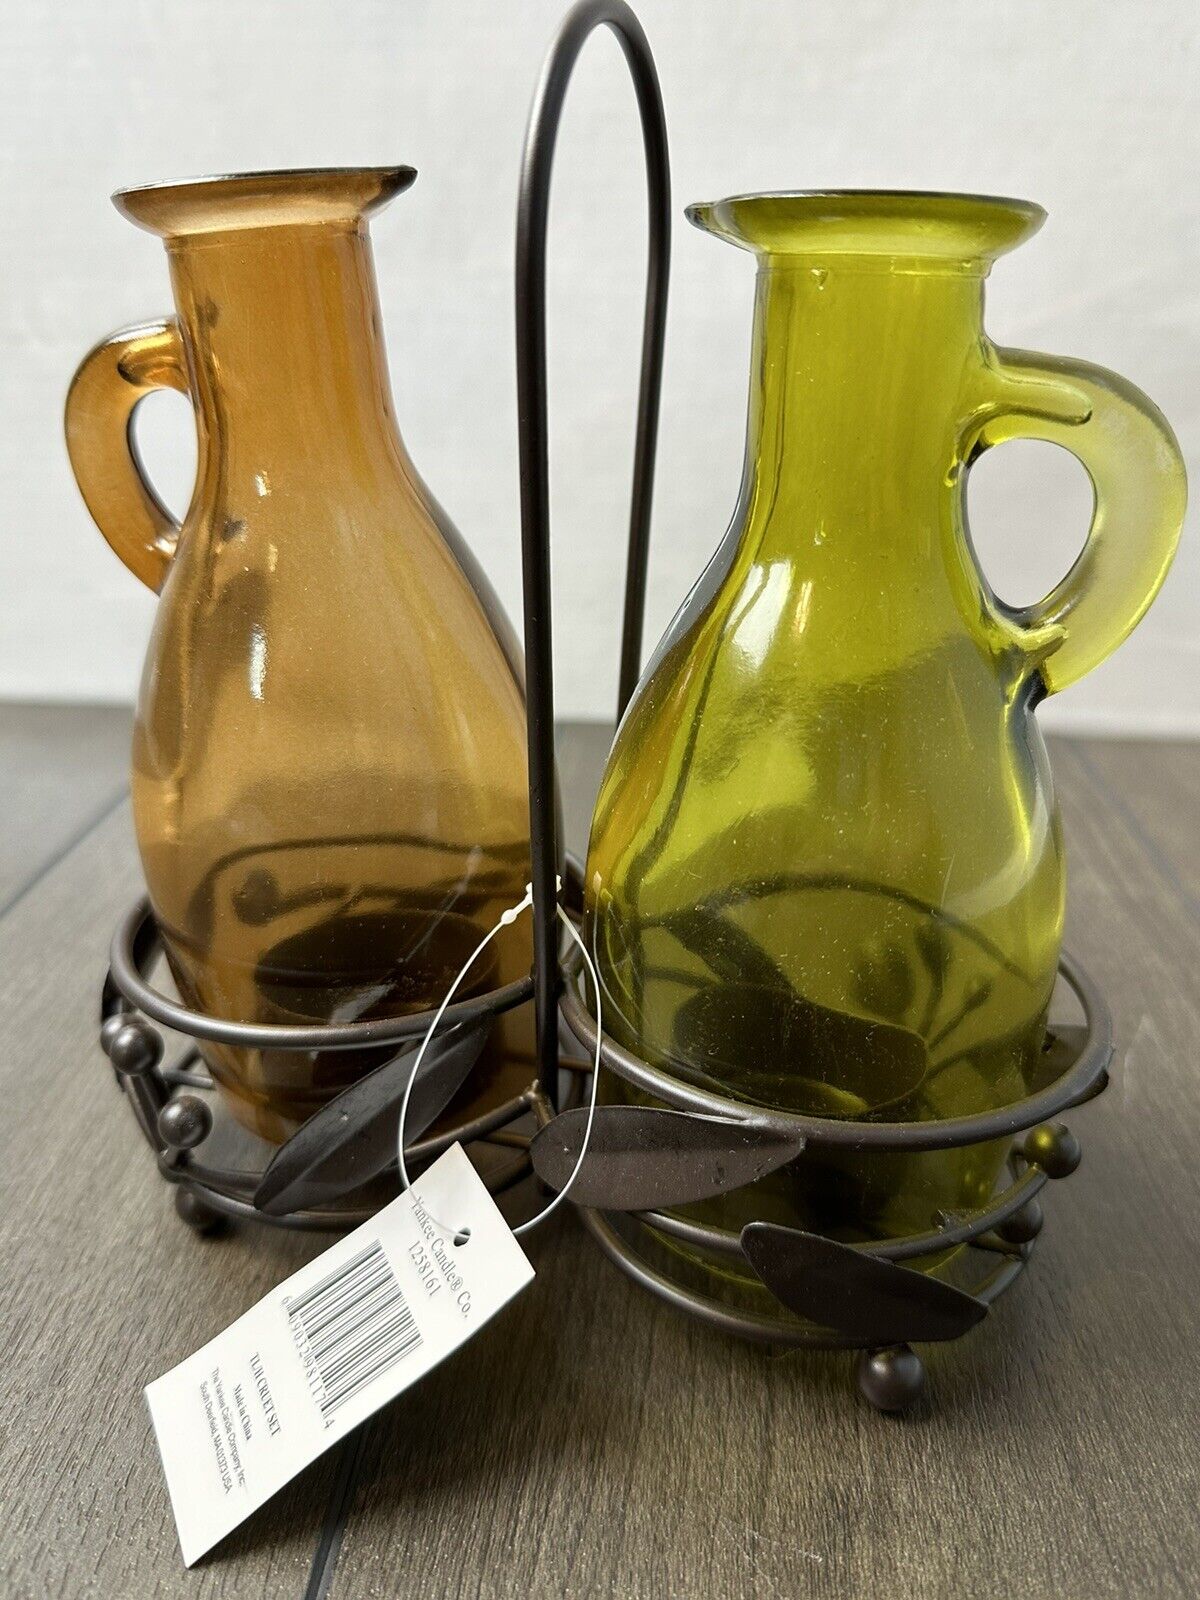 Yankee Candle Oil and Vinegar Cruet Set Tea Light and Metal Holder